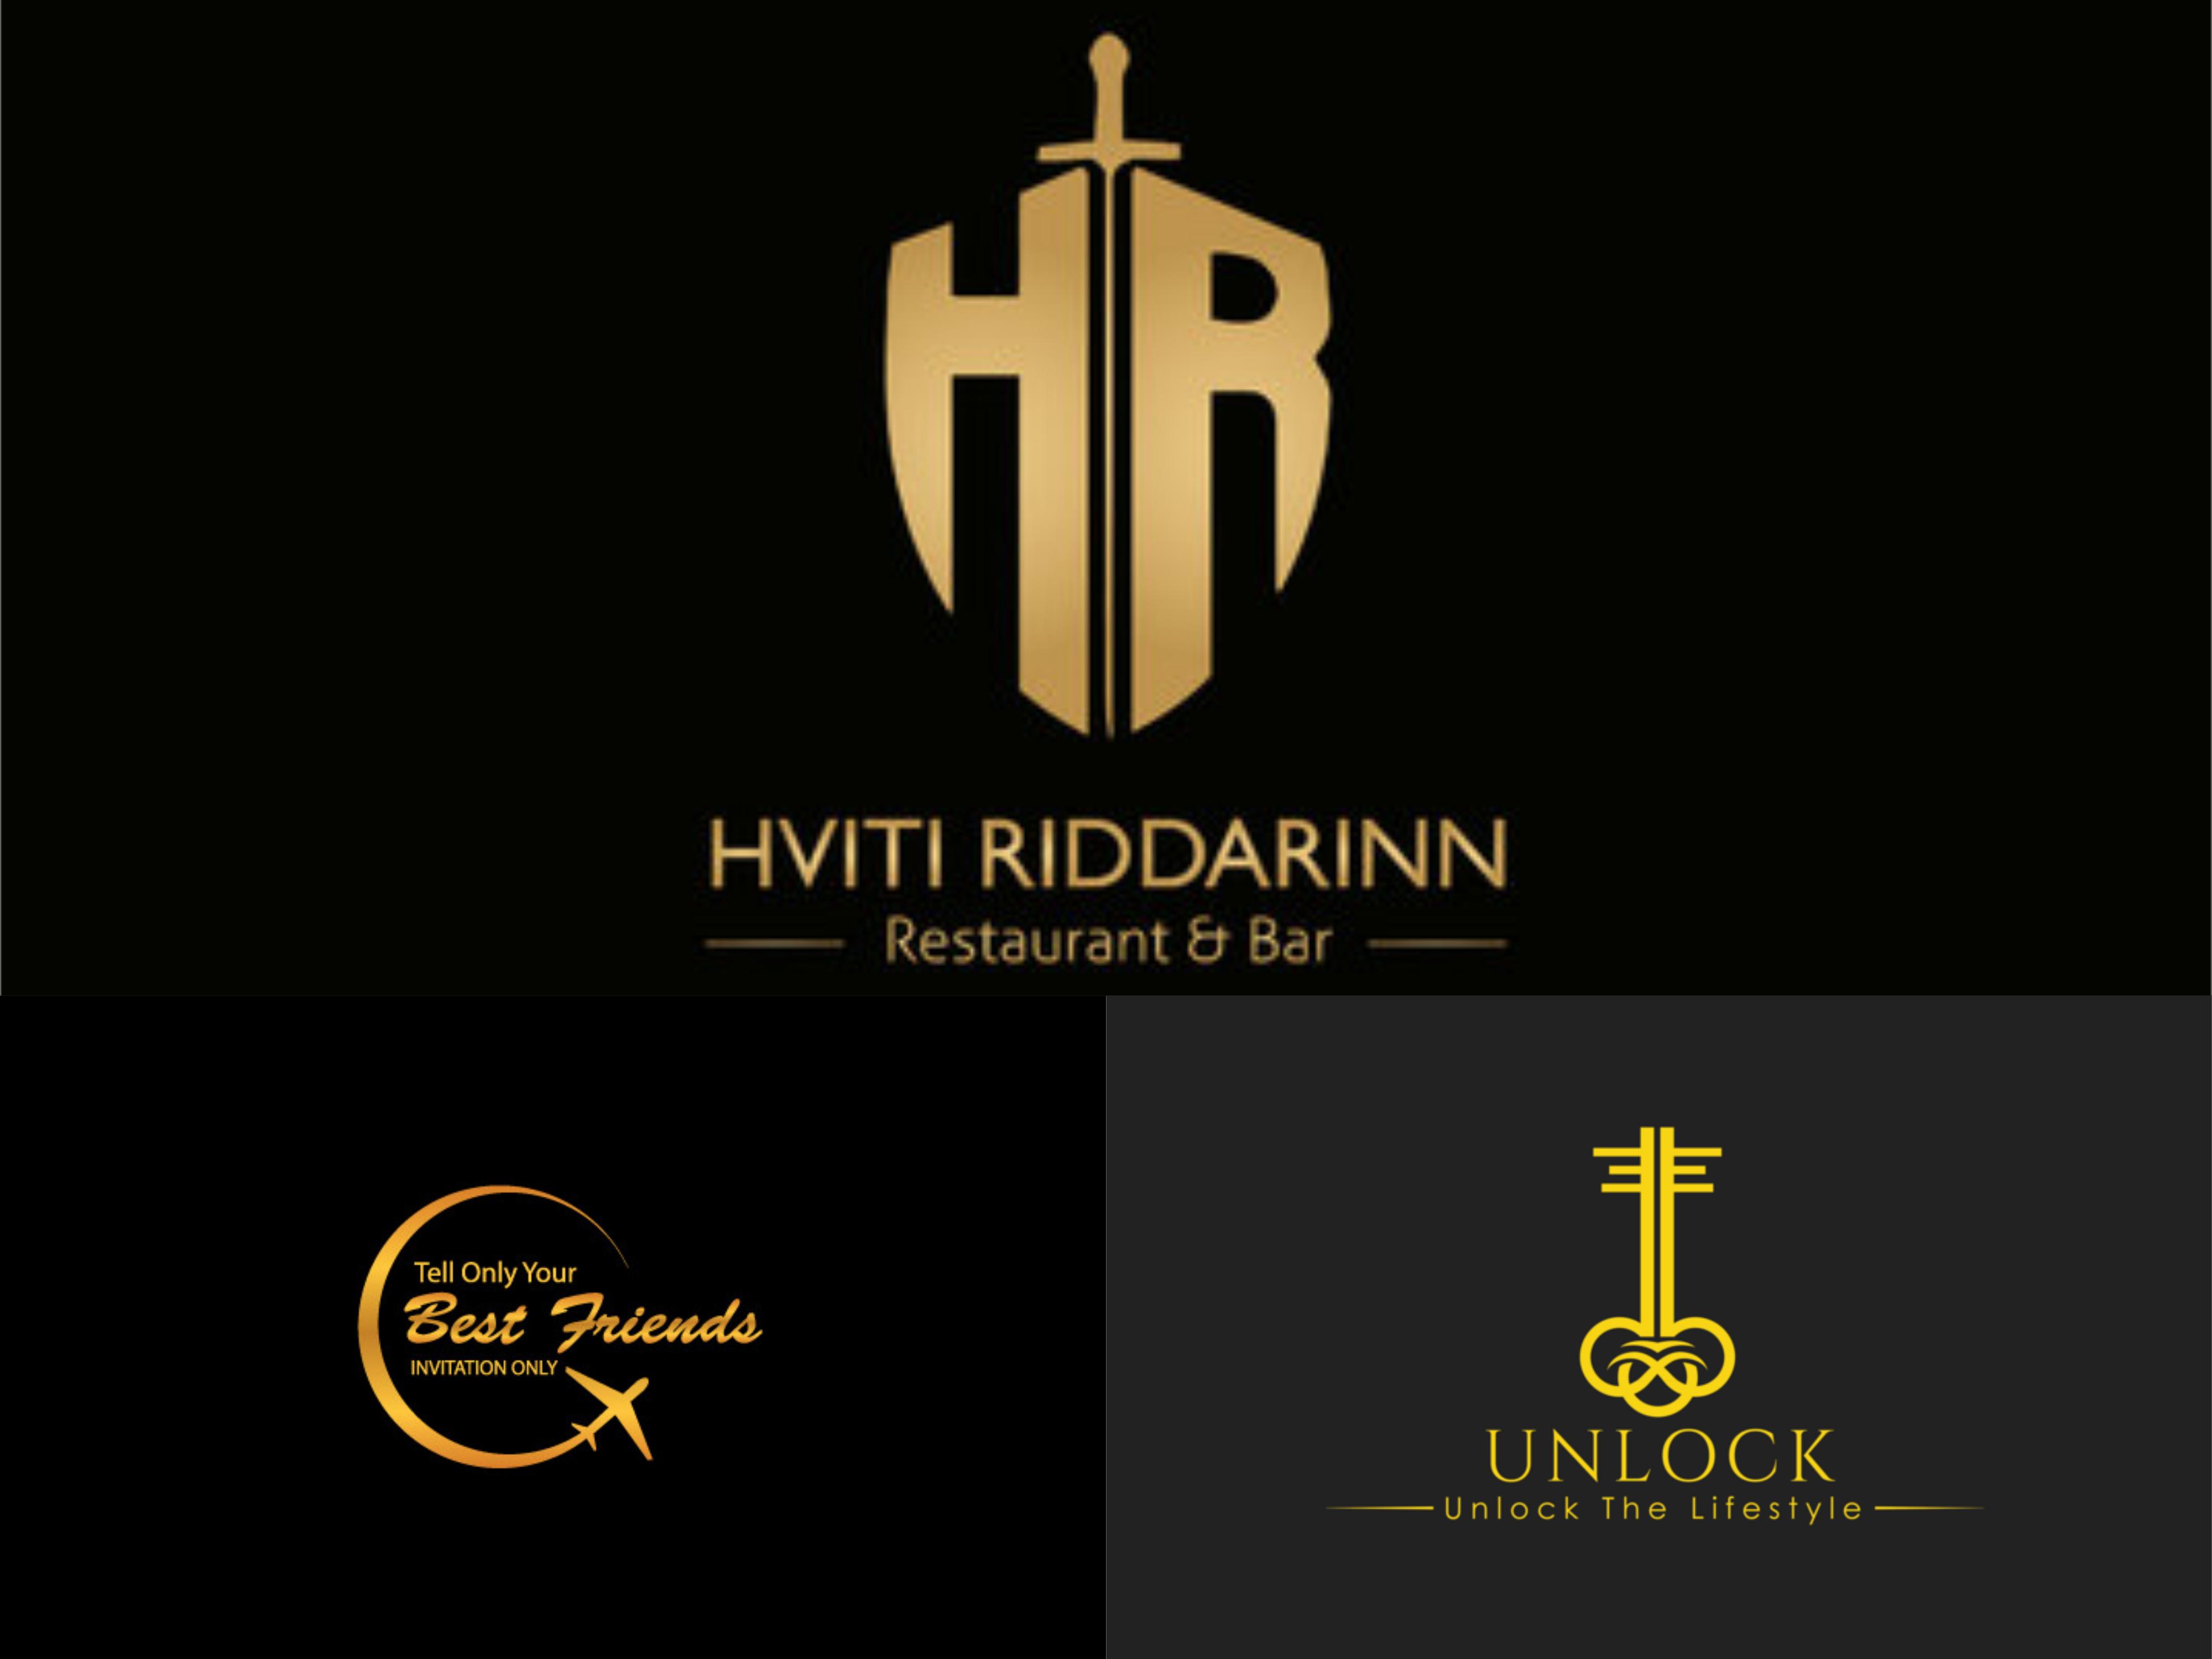 do elegant and luxury brand logo design